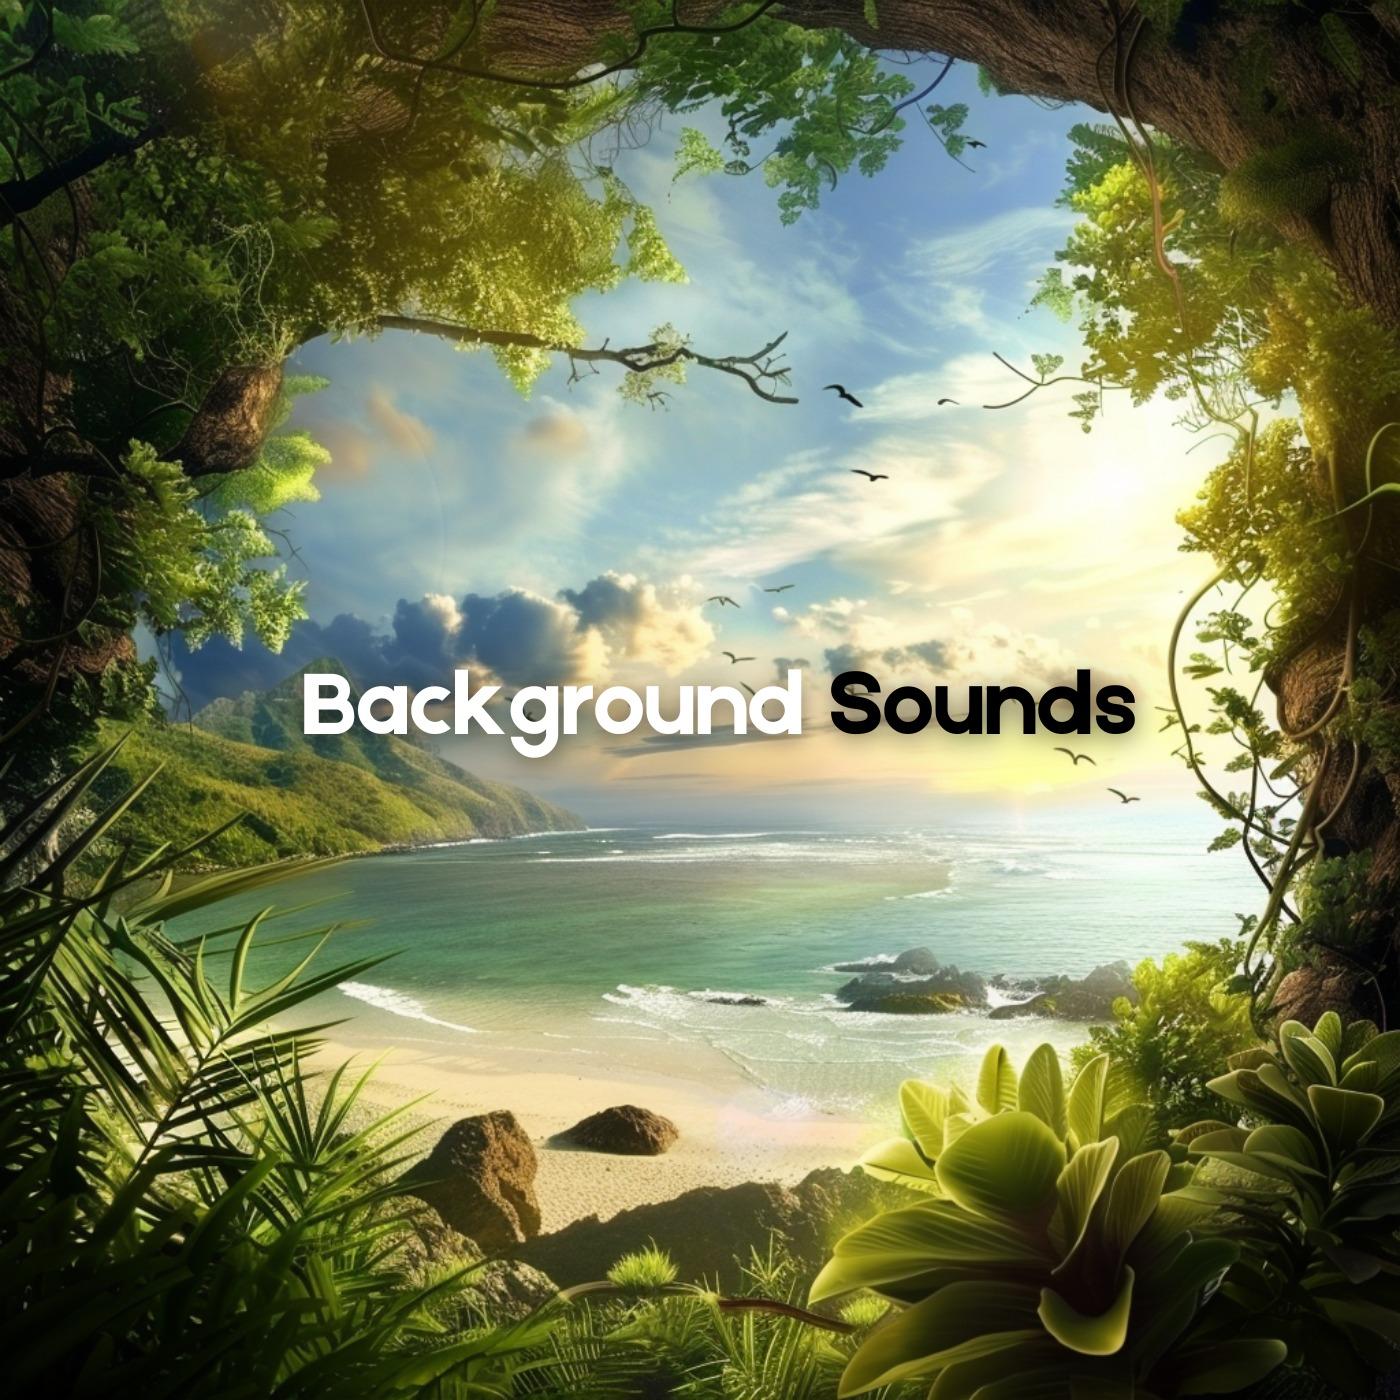 Background Sounds